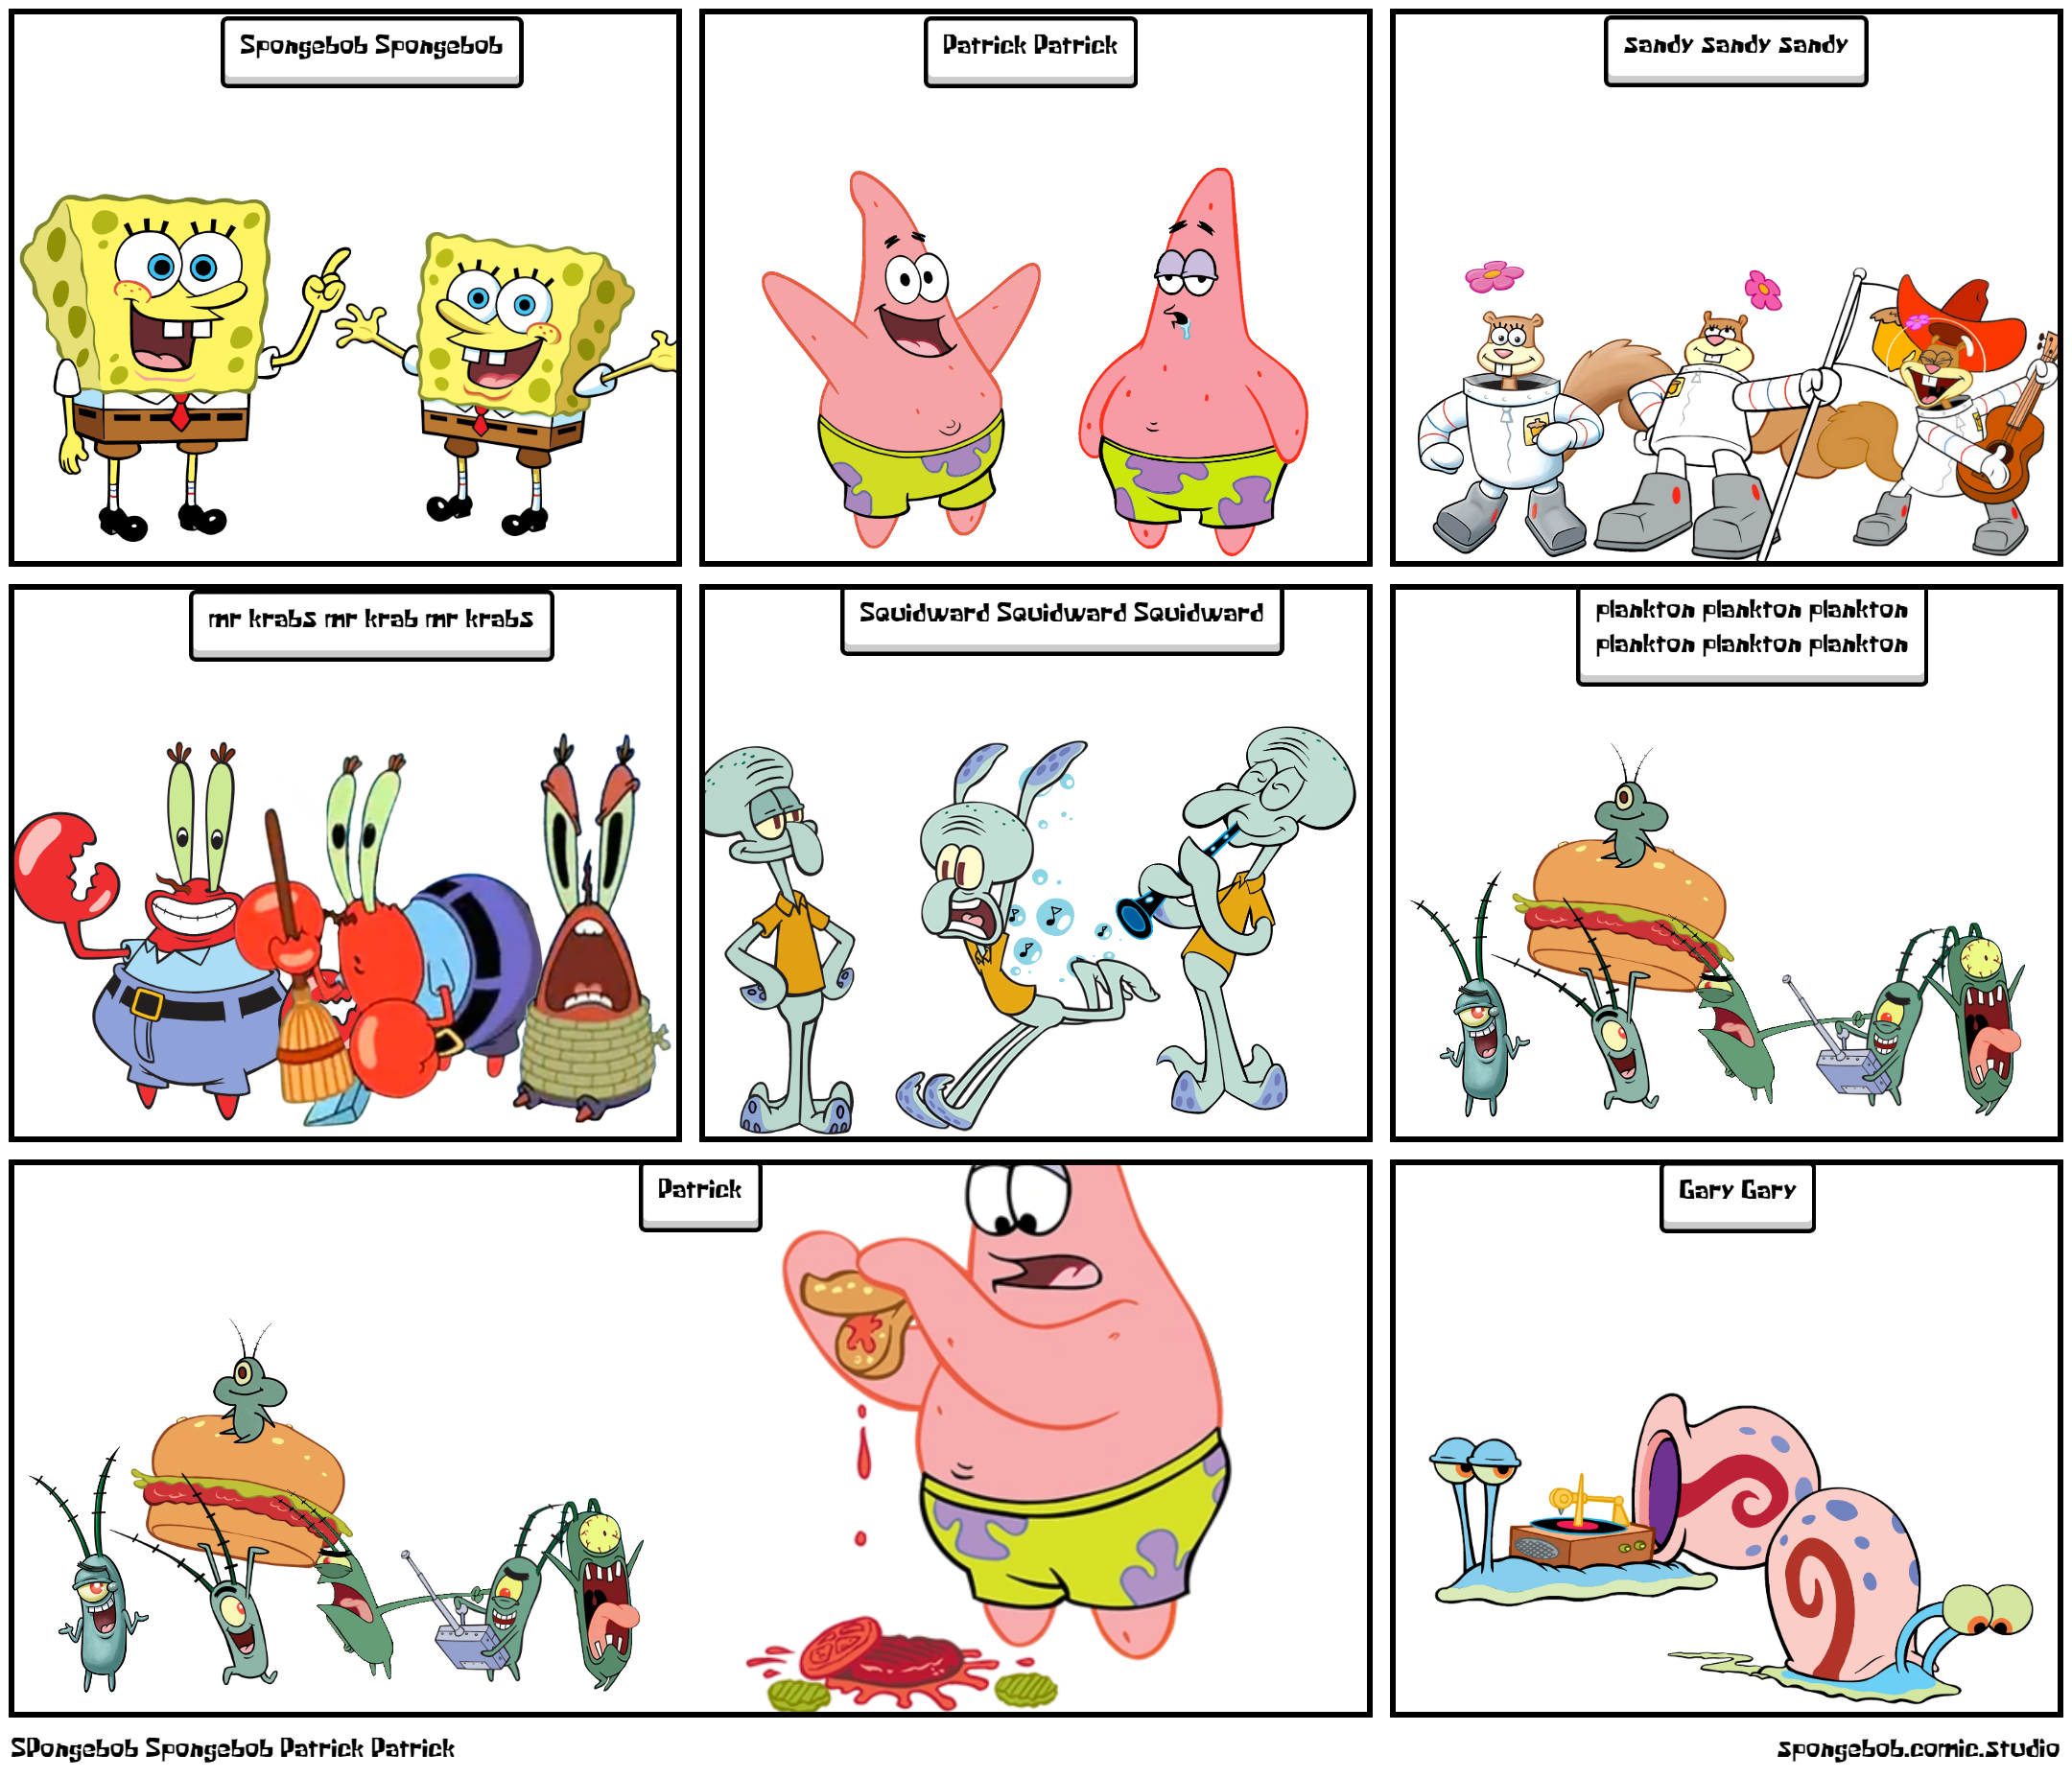 SPongebob Spongebob Patrick Patrick